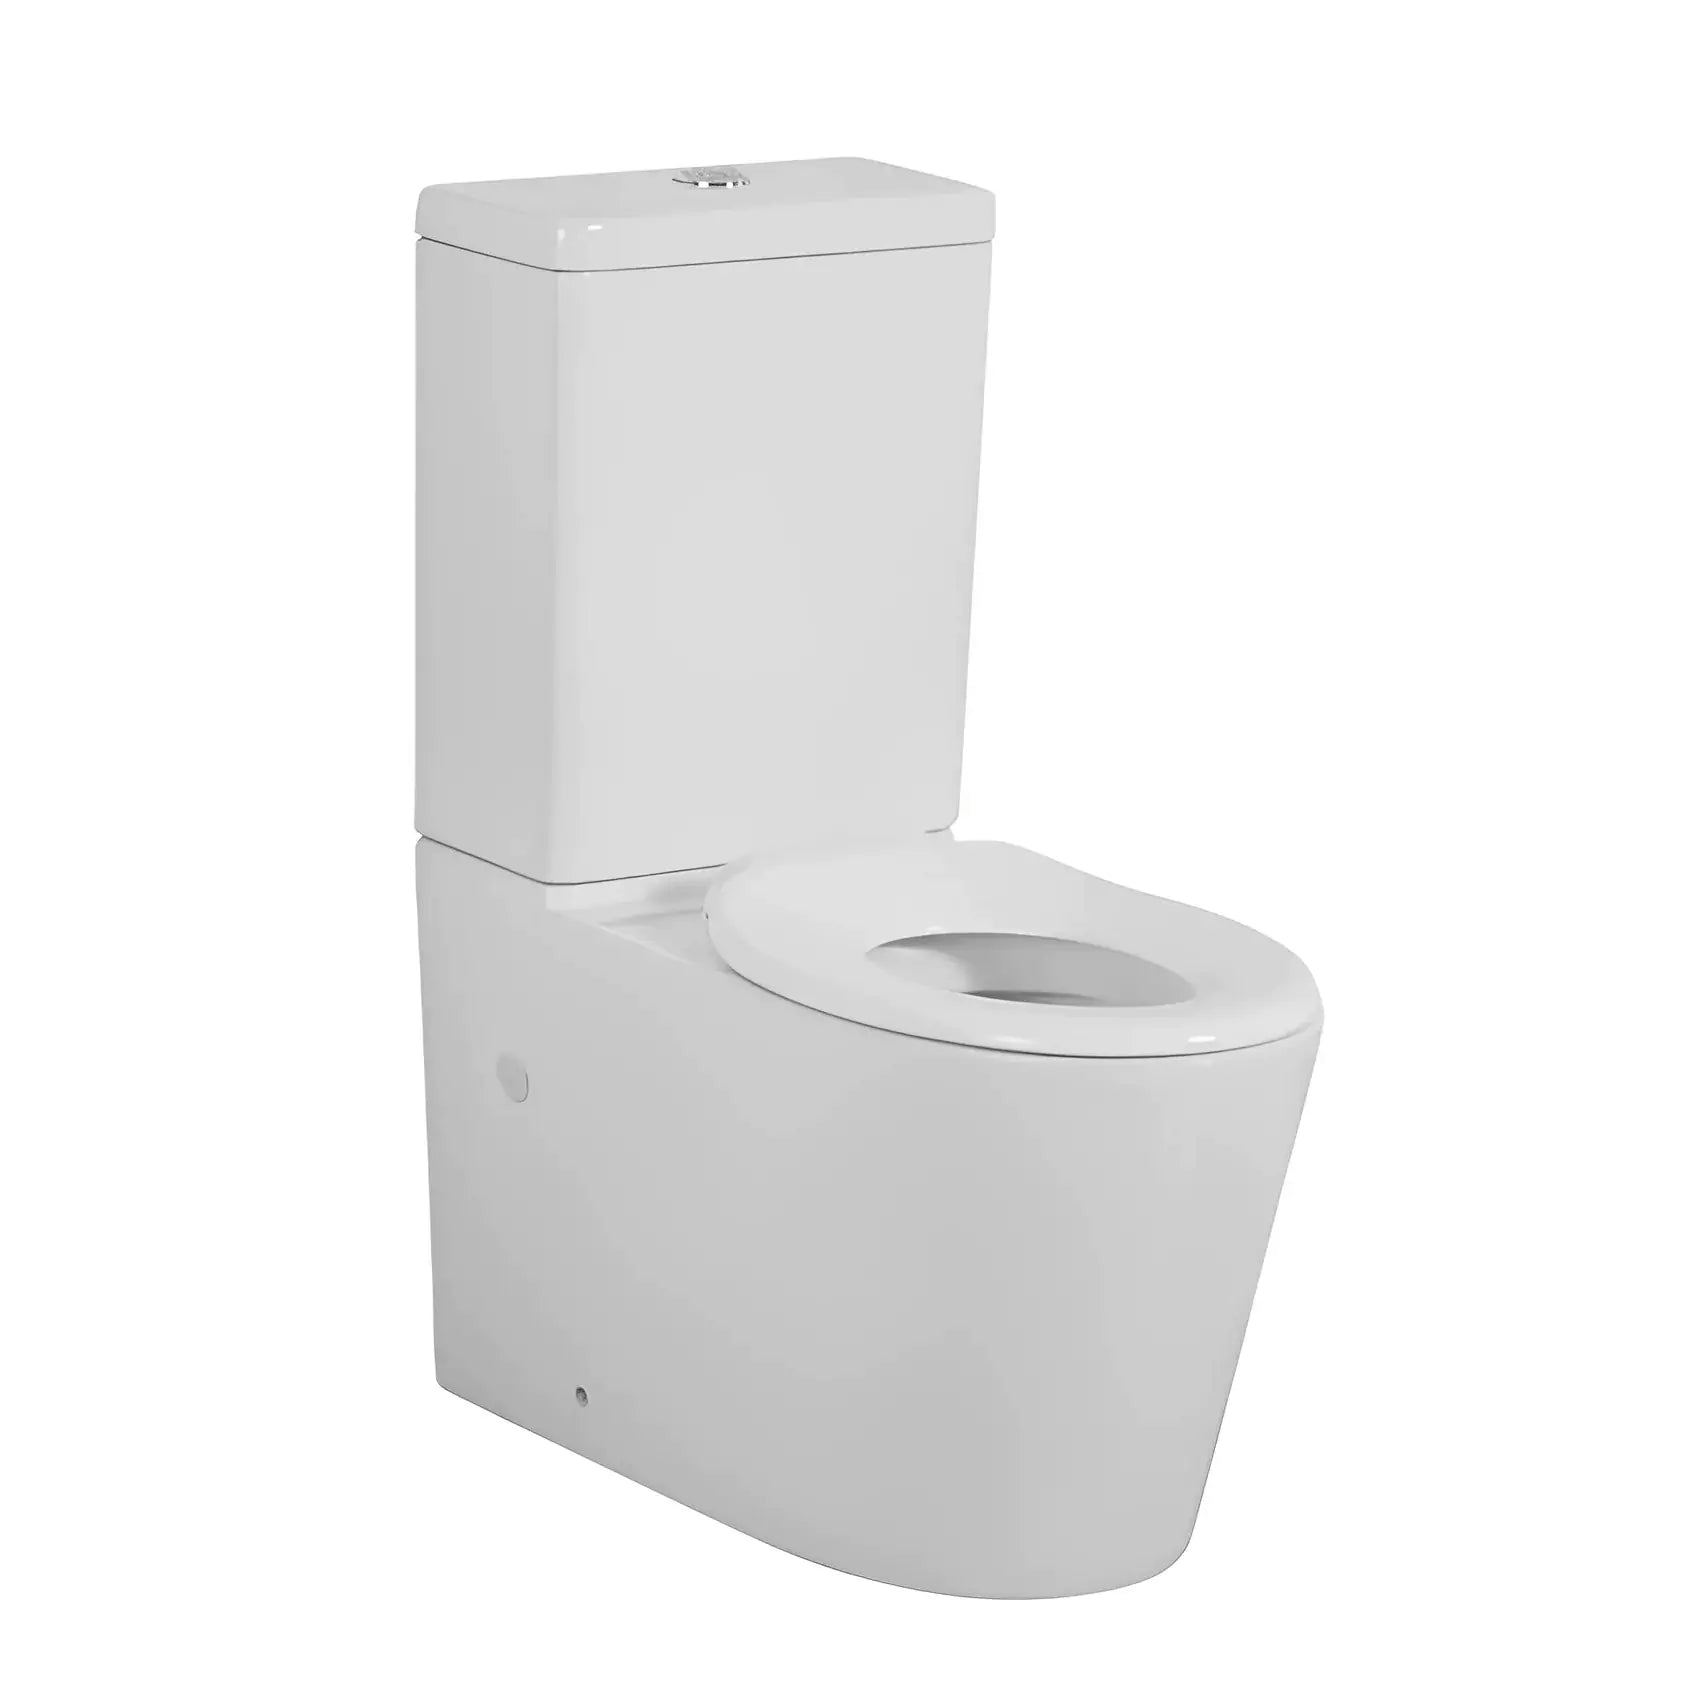 Avis Rimless Junior Wall Faced Toilet Suite: Efficient and Sleek Design for Modern Bathrooms-Gloss White-KDK600JC/KDK600JP